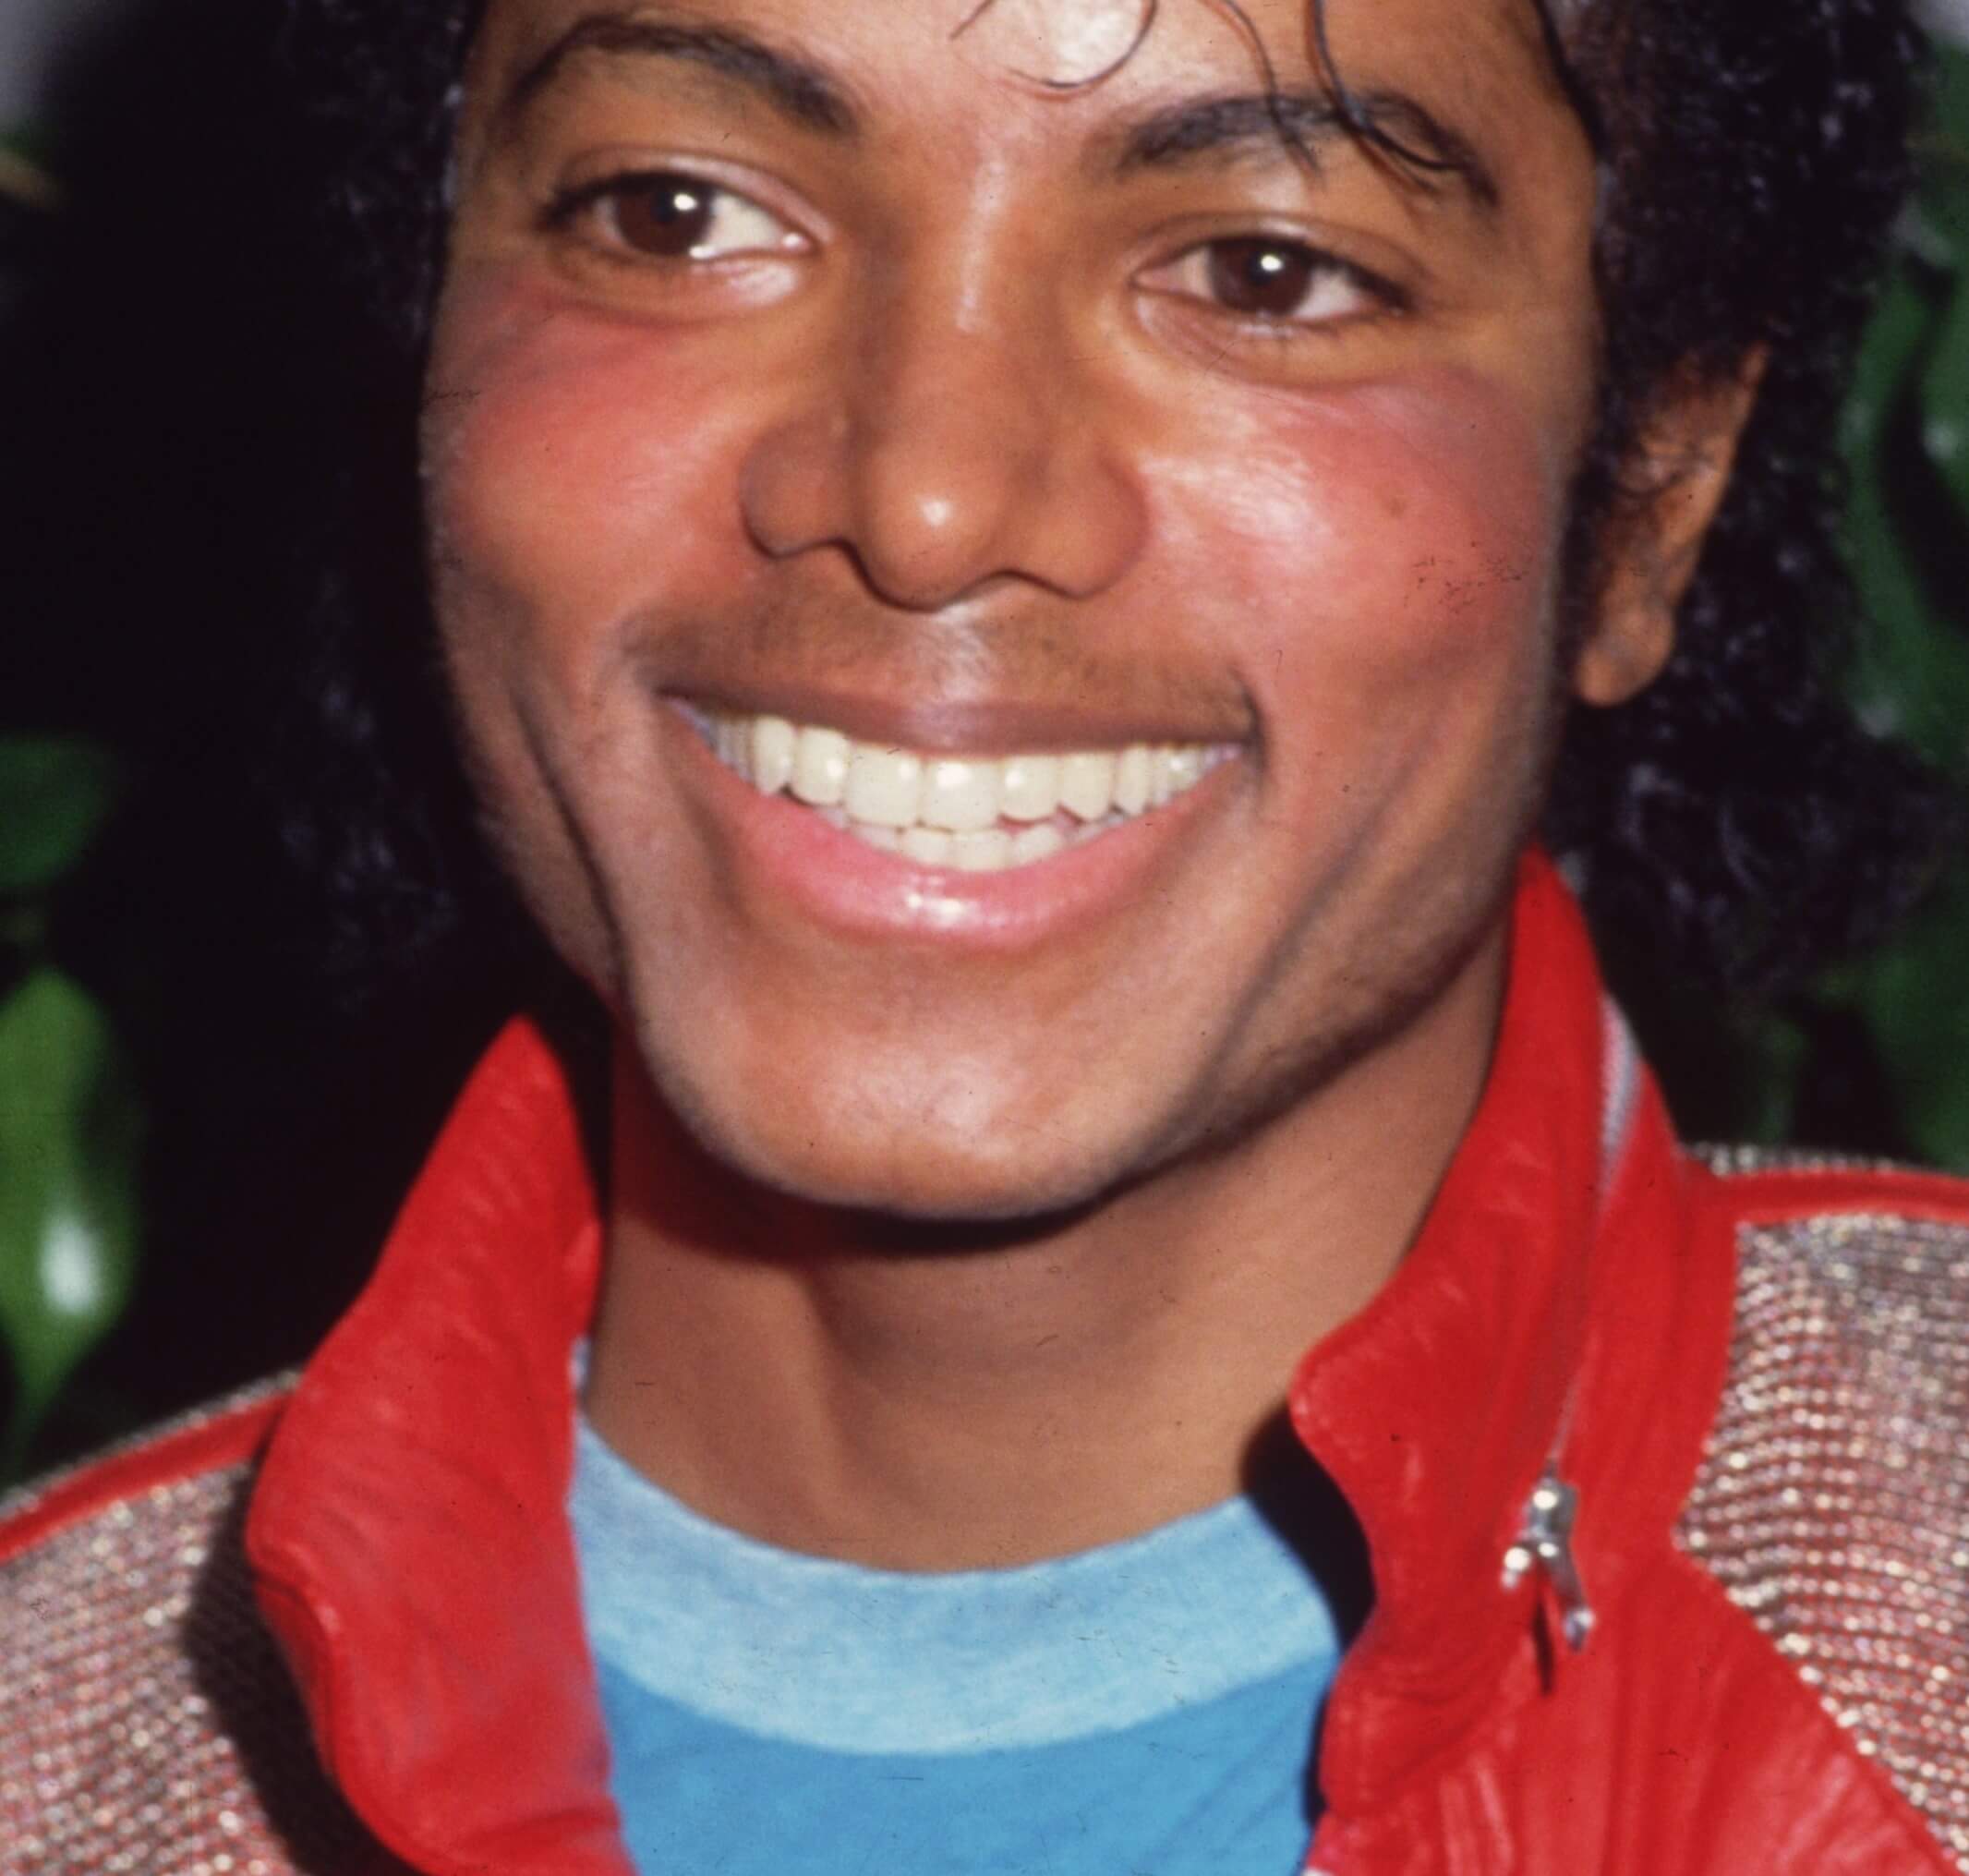 "Billie Jean" singer Michael Jackson smiling